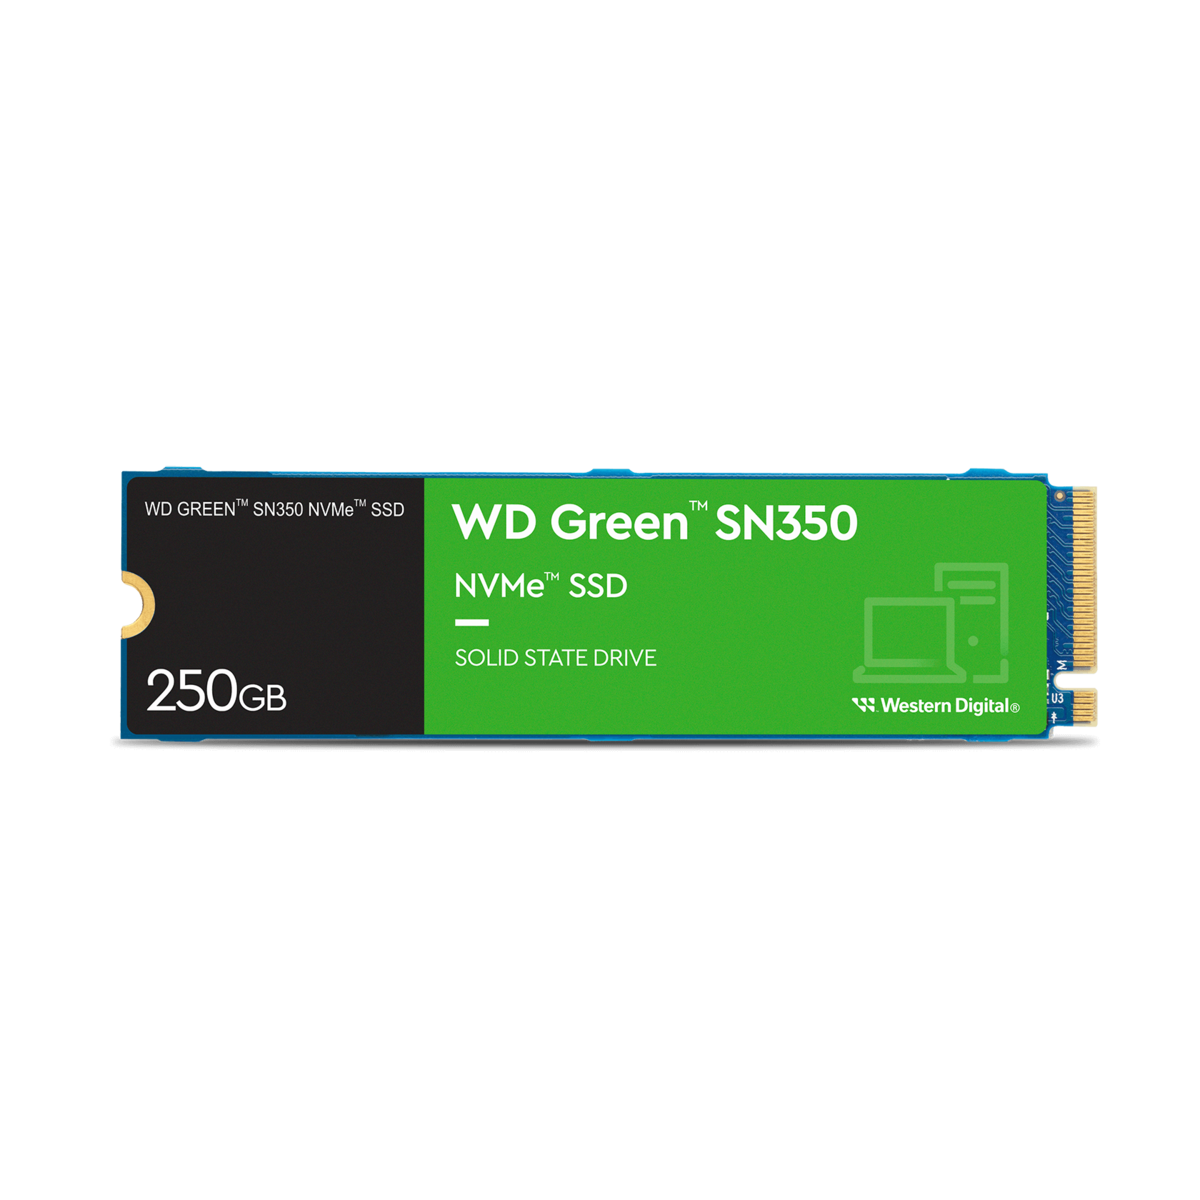 diapositiva 2 de 3, aumentar tamaño, wd green™ sn350 nvme™ ssd - 250gb